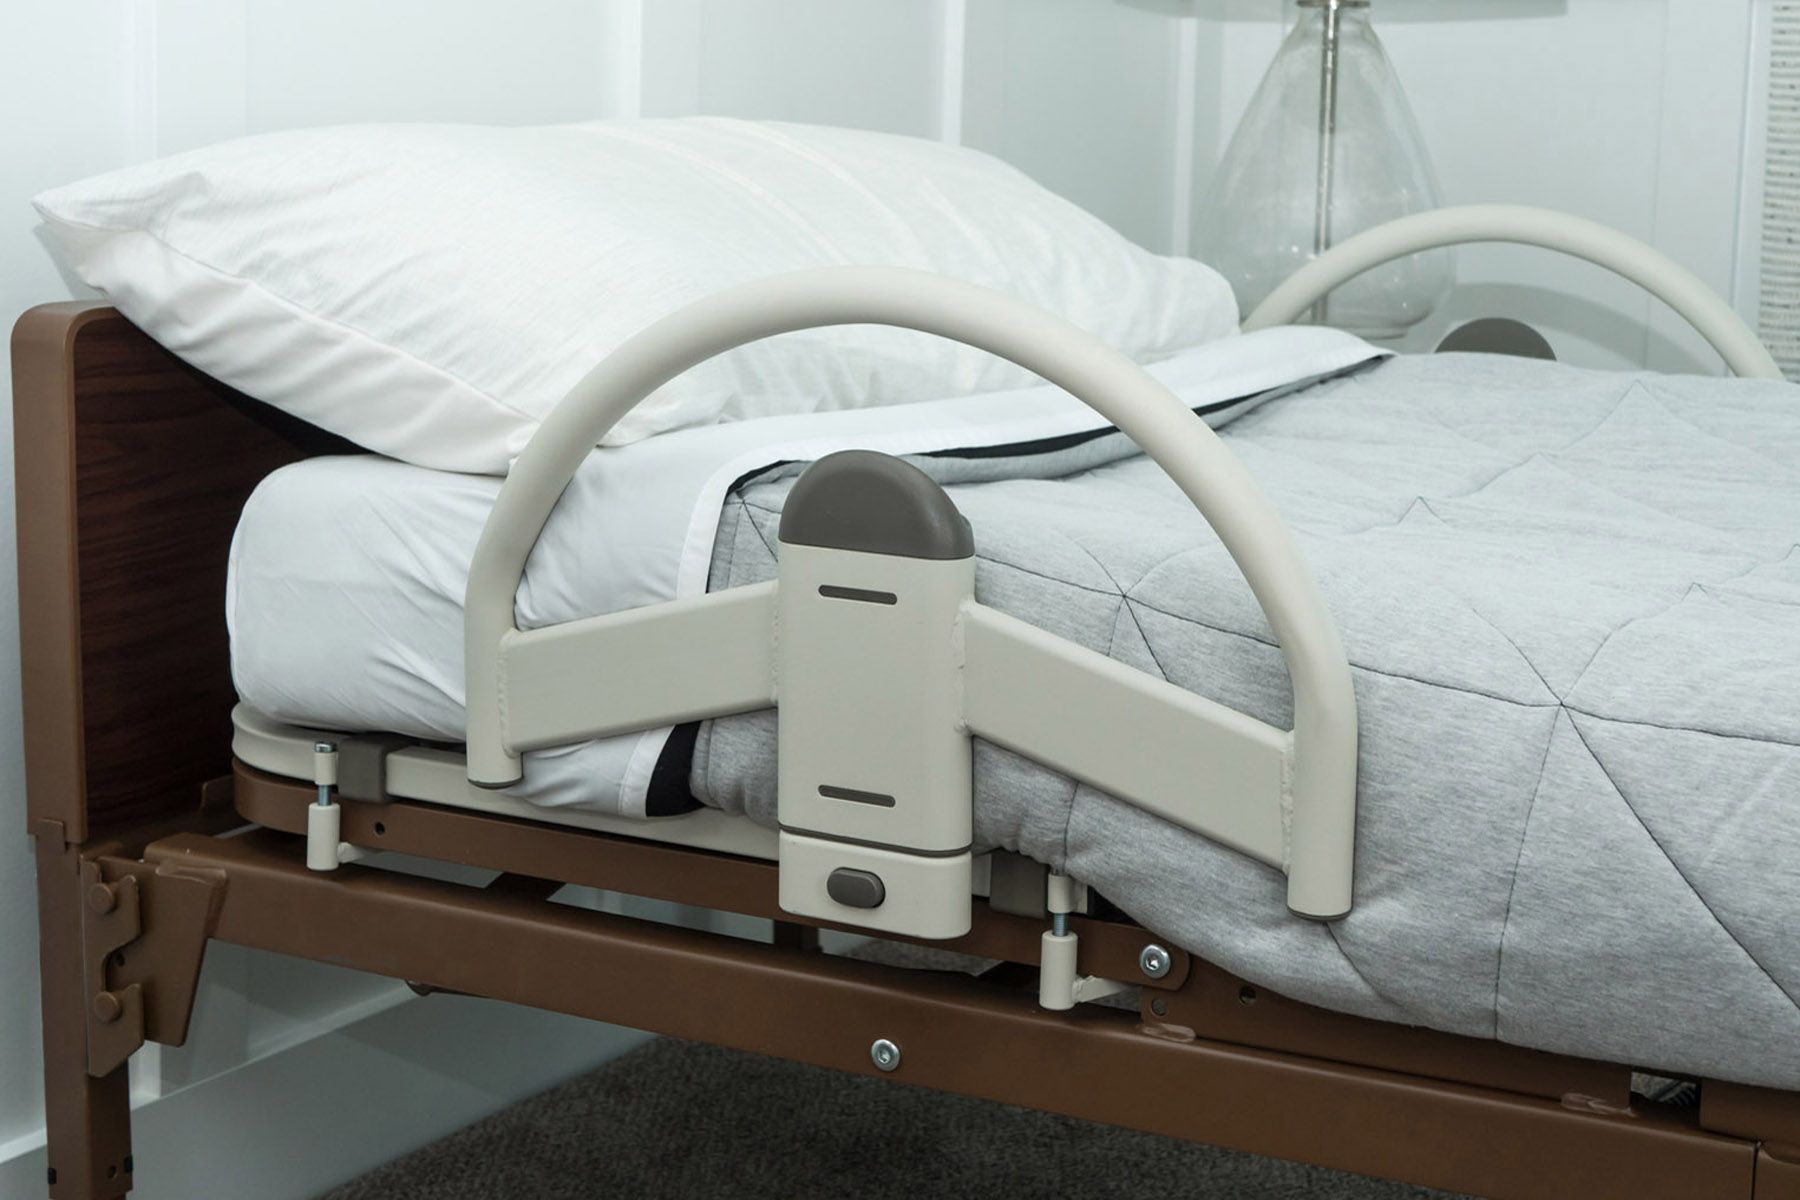 Bedrail for adjustable beds